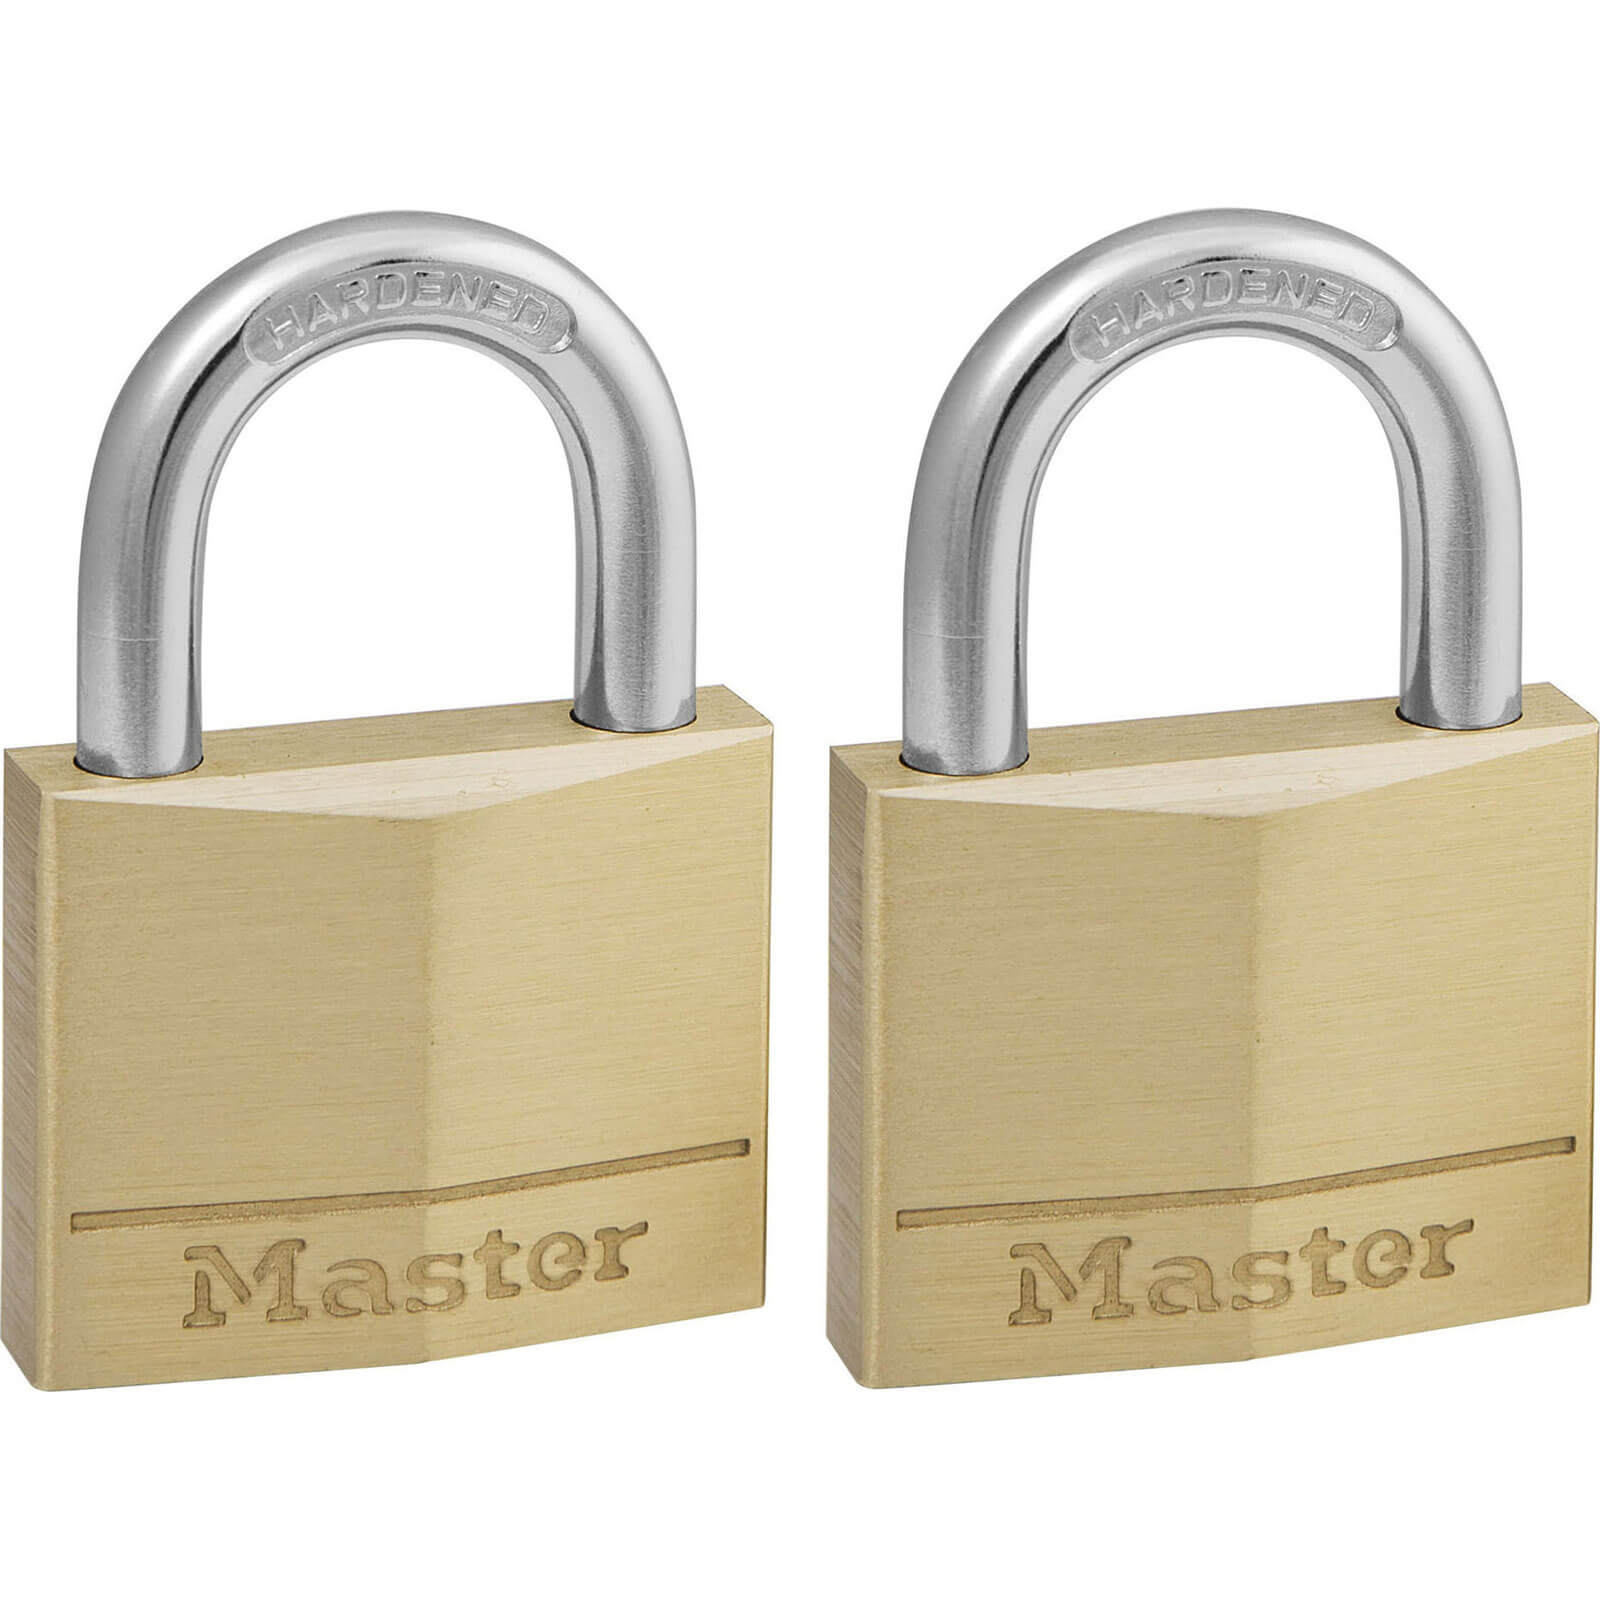 Image of Masterlock Solid Brass Padlock Pack of 2 Keyed Alike 40mm Standard